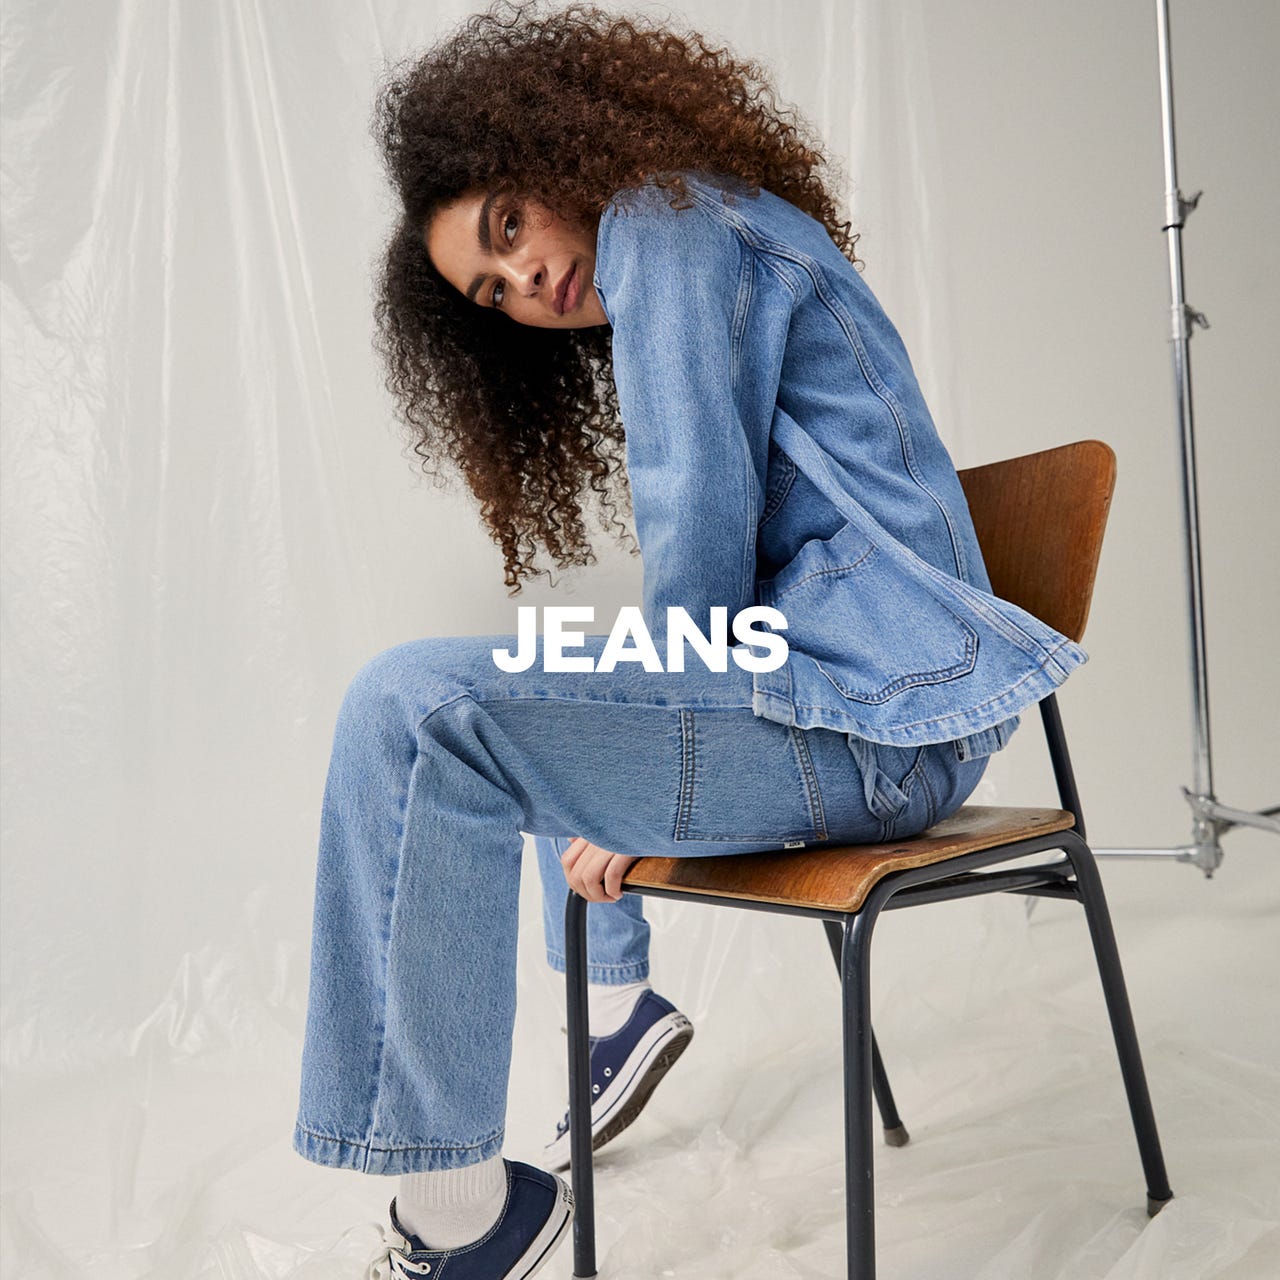 jjxx-jeans-dayz27-focus-row6-box2-en-ie.jpg